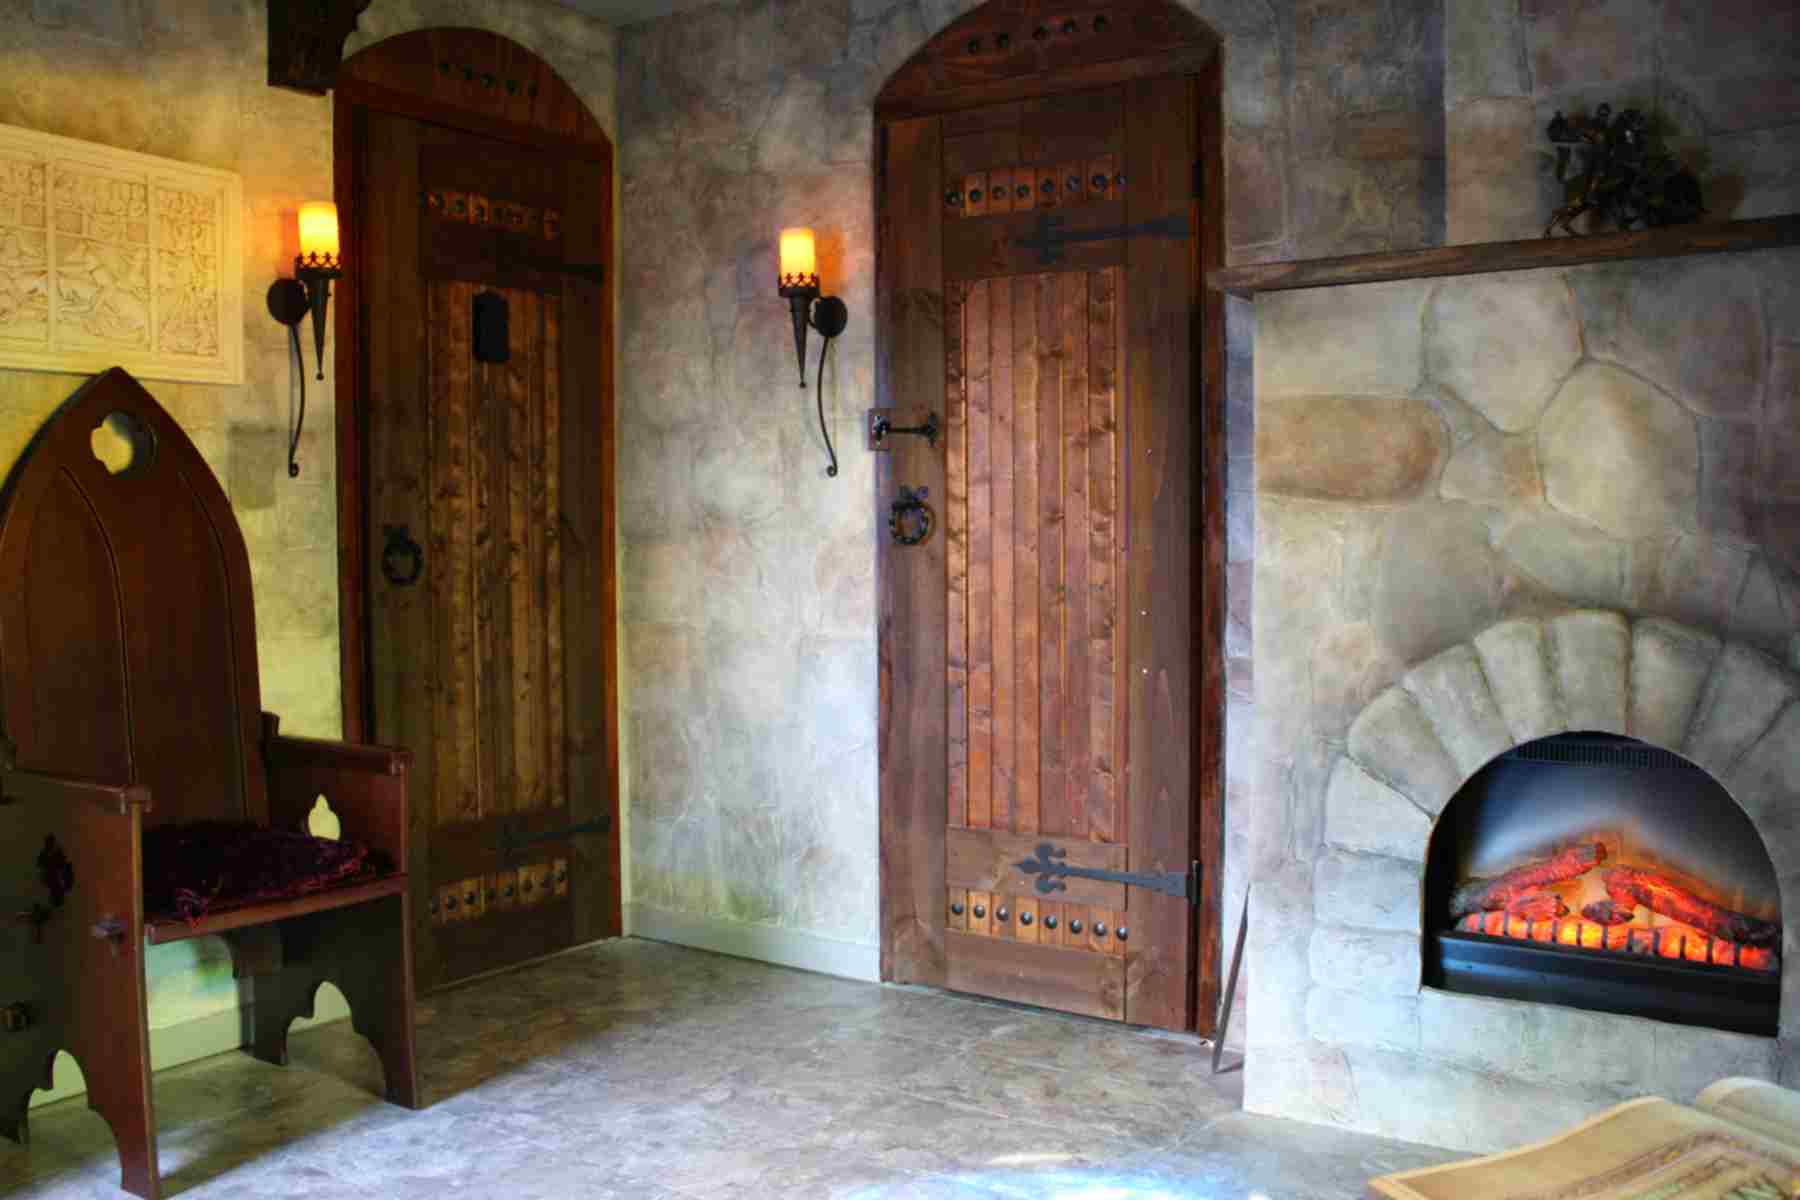 Magnificently Medieval Room Decor - Barron Designs